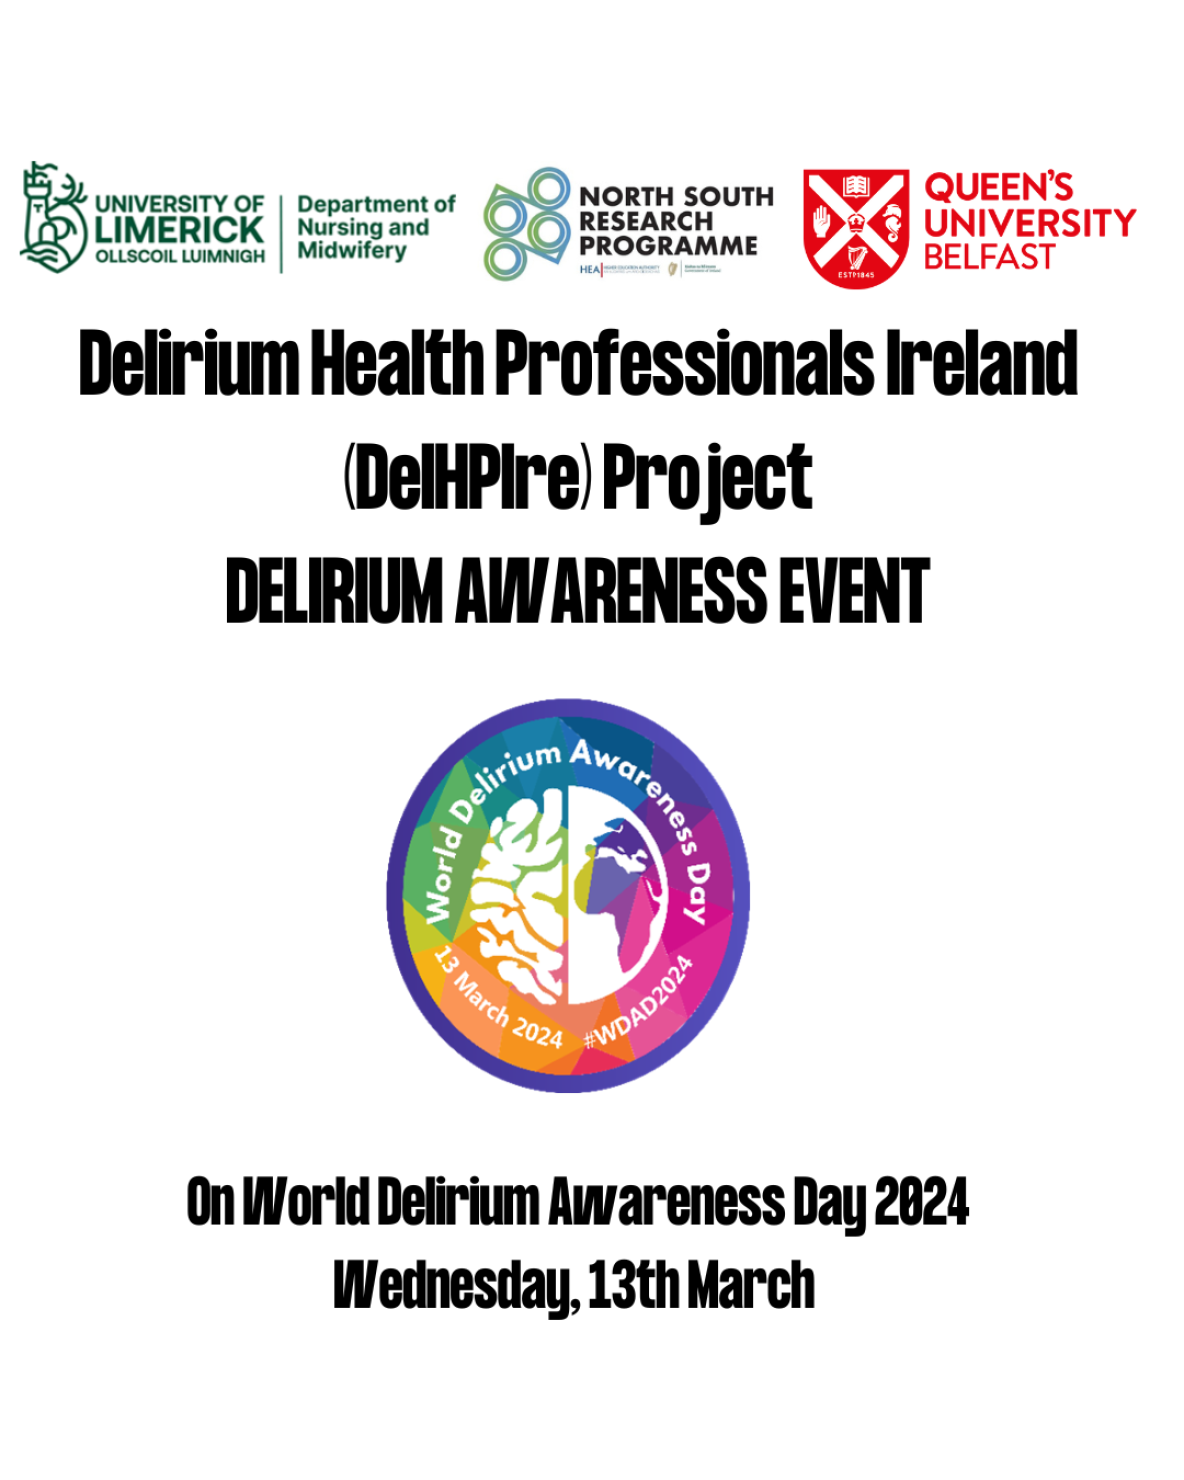 Delerium Awareness Event Poster with logos 